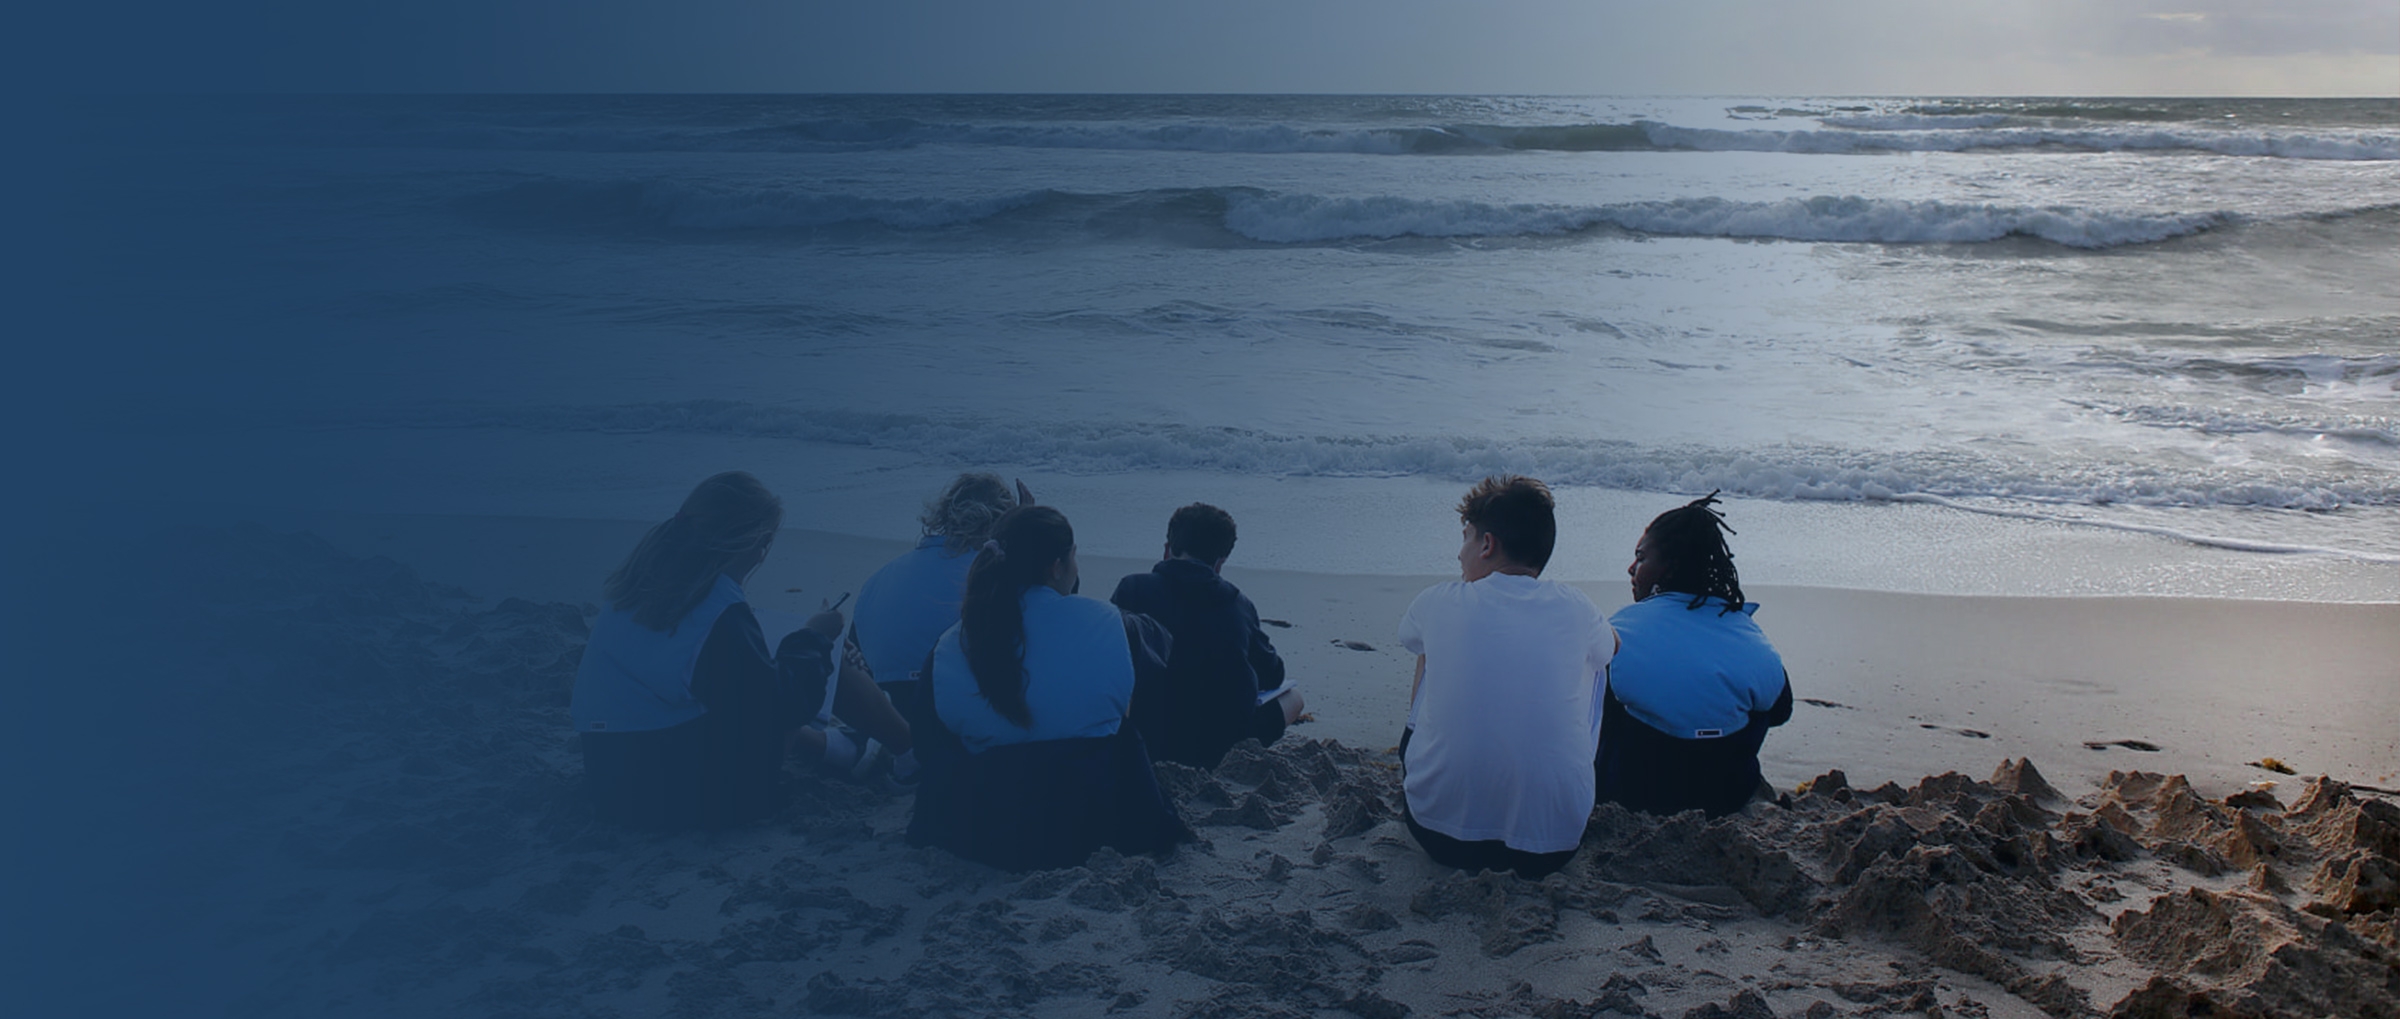 gulf stream school students sitting on the beach